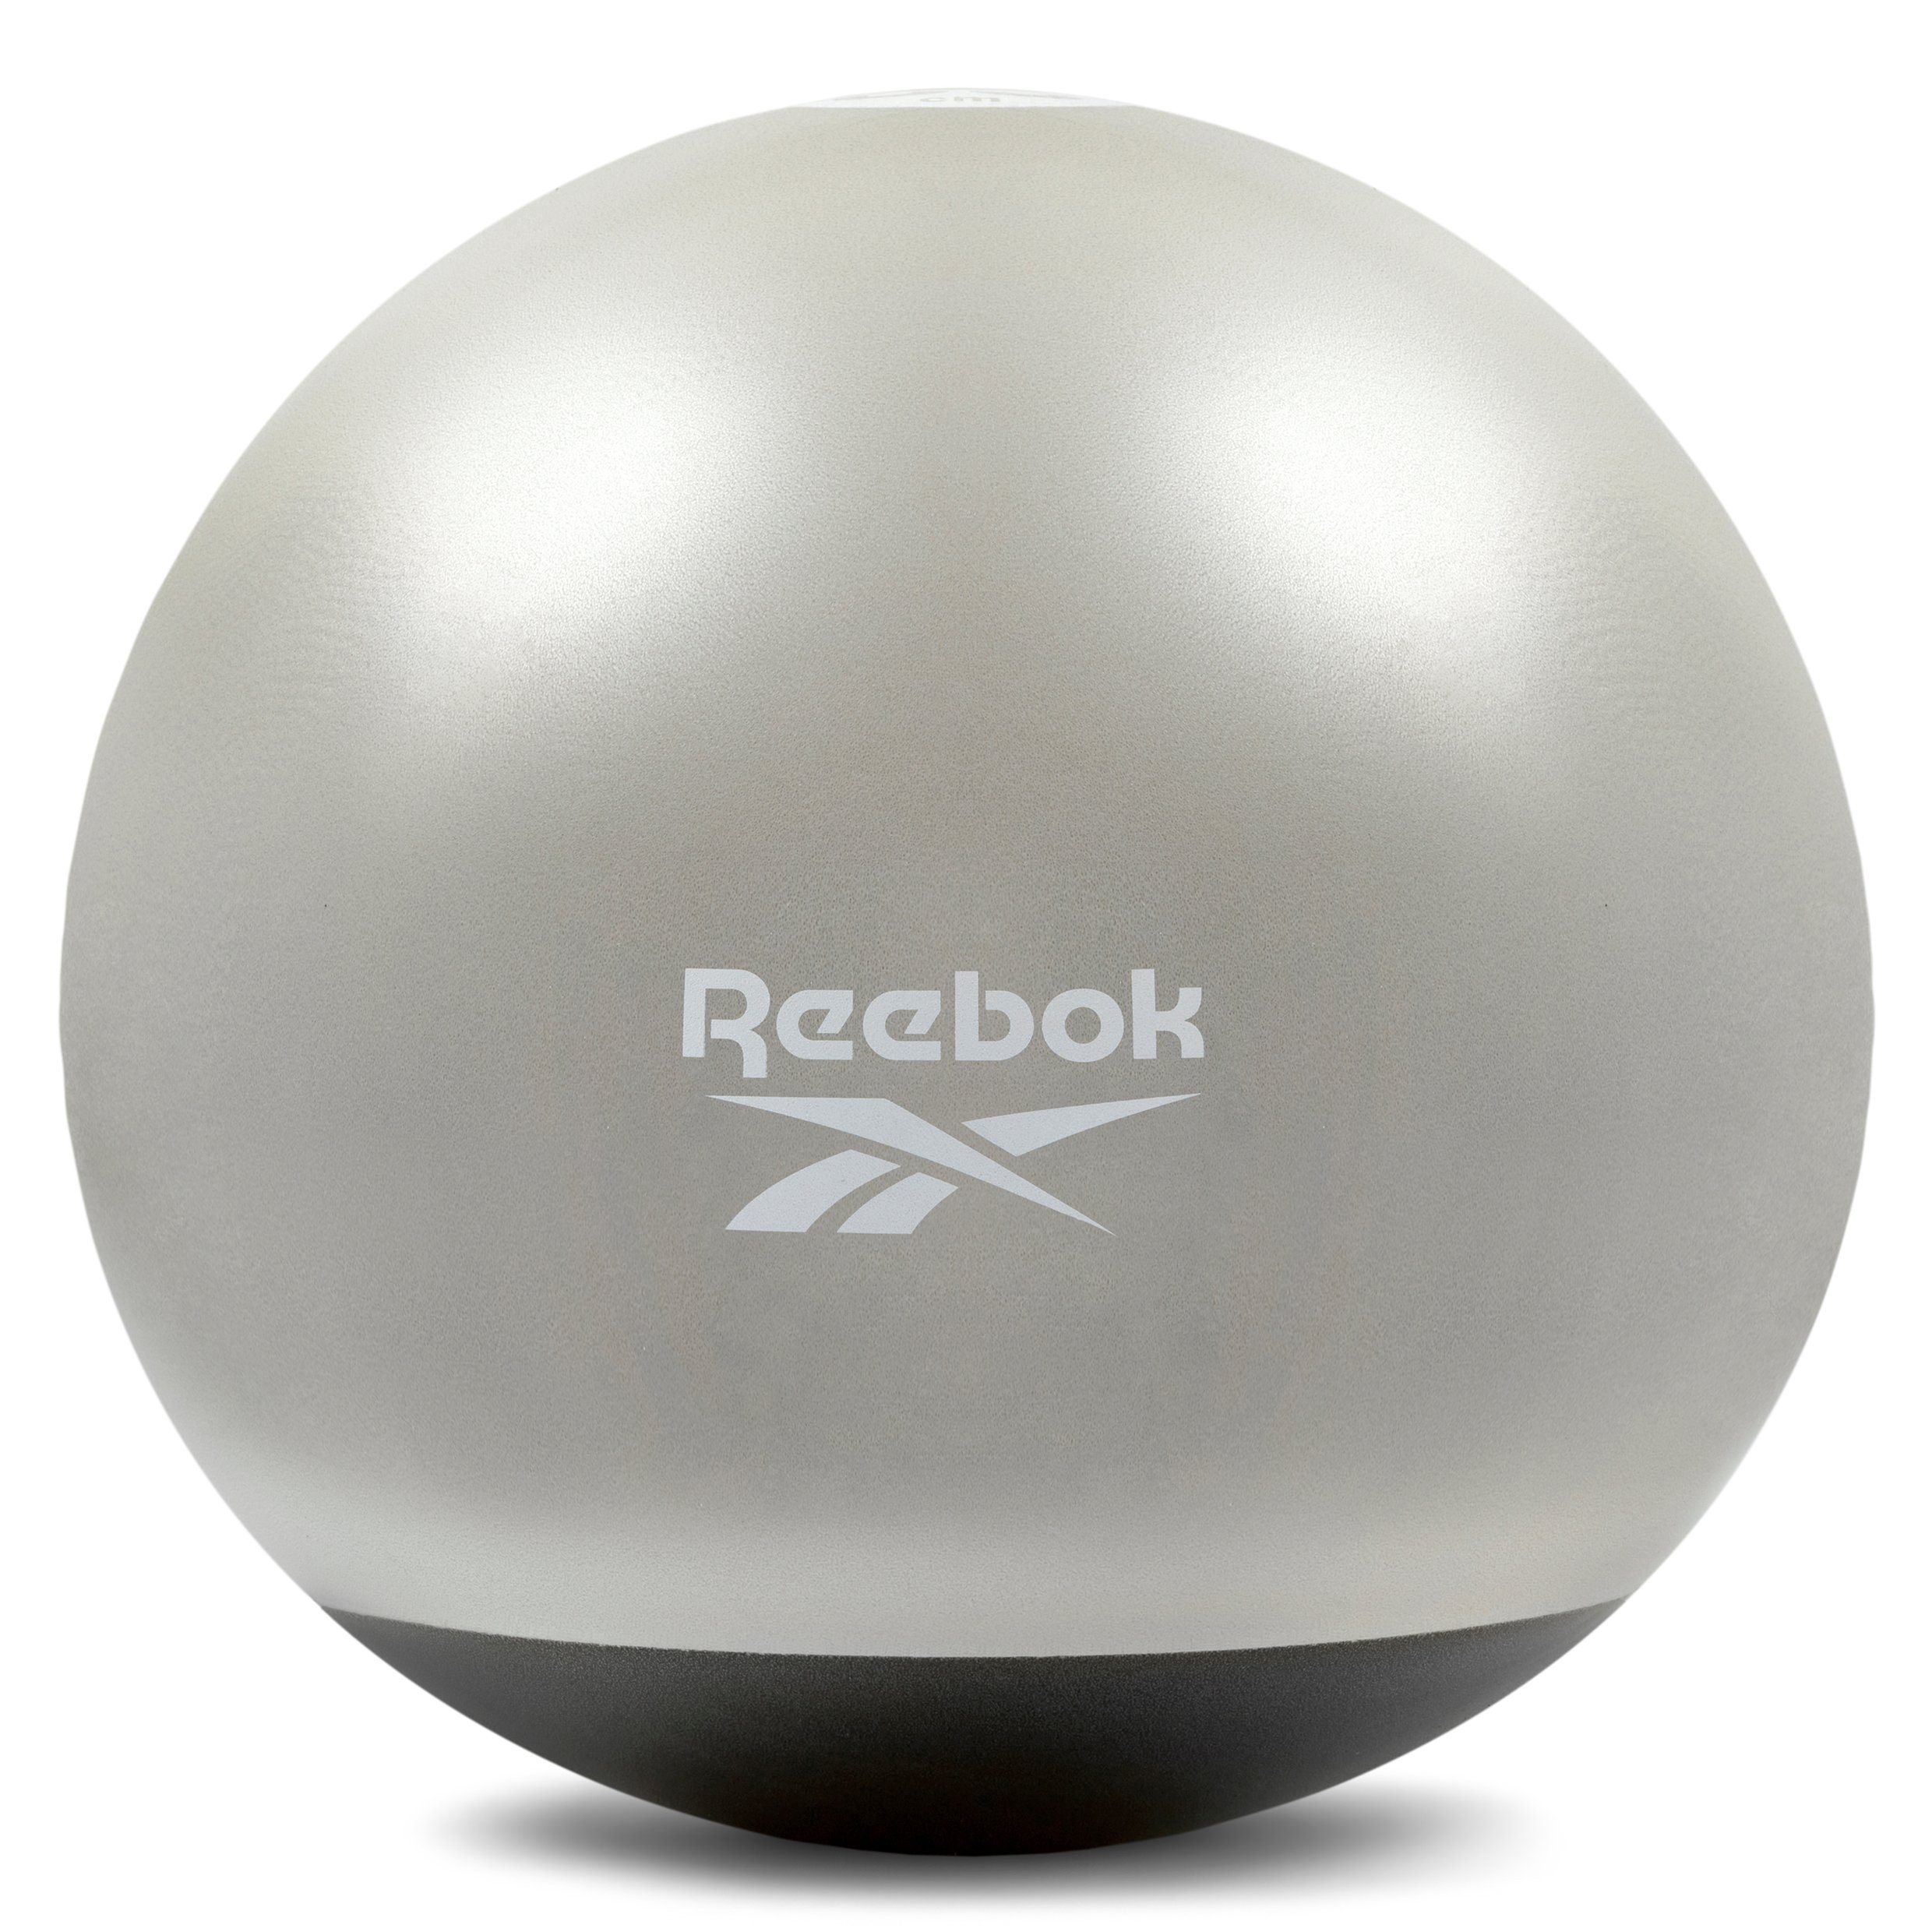 Wegrollen cm, Gymnastikball & Ø fördern Stabilitäts-Gymball zu Reebok Reebok beschwerten verhindern Grau/Schwarz, Stabilität Basis, zu um 75